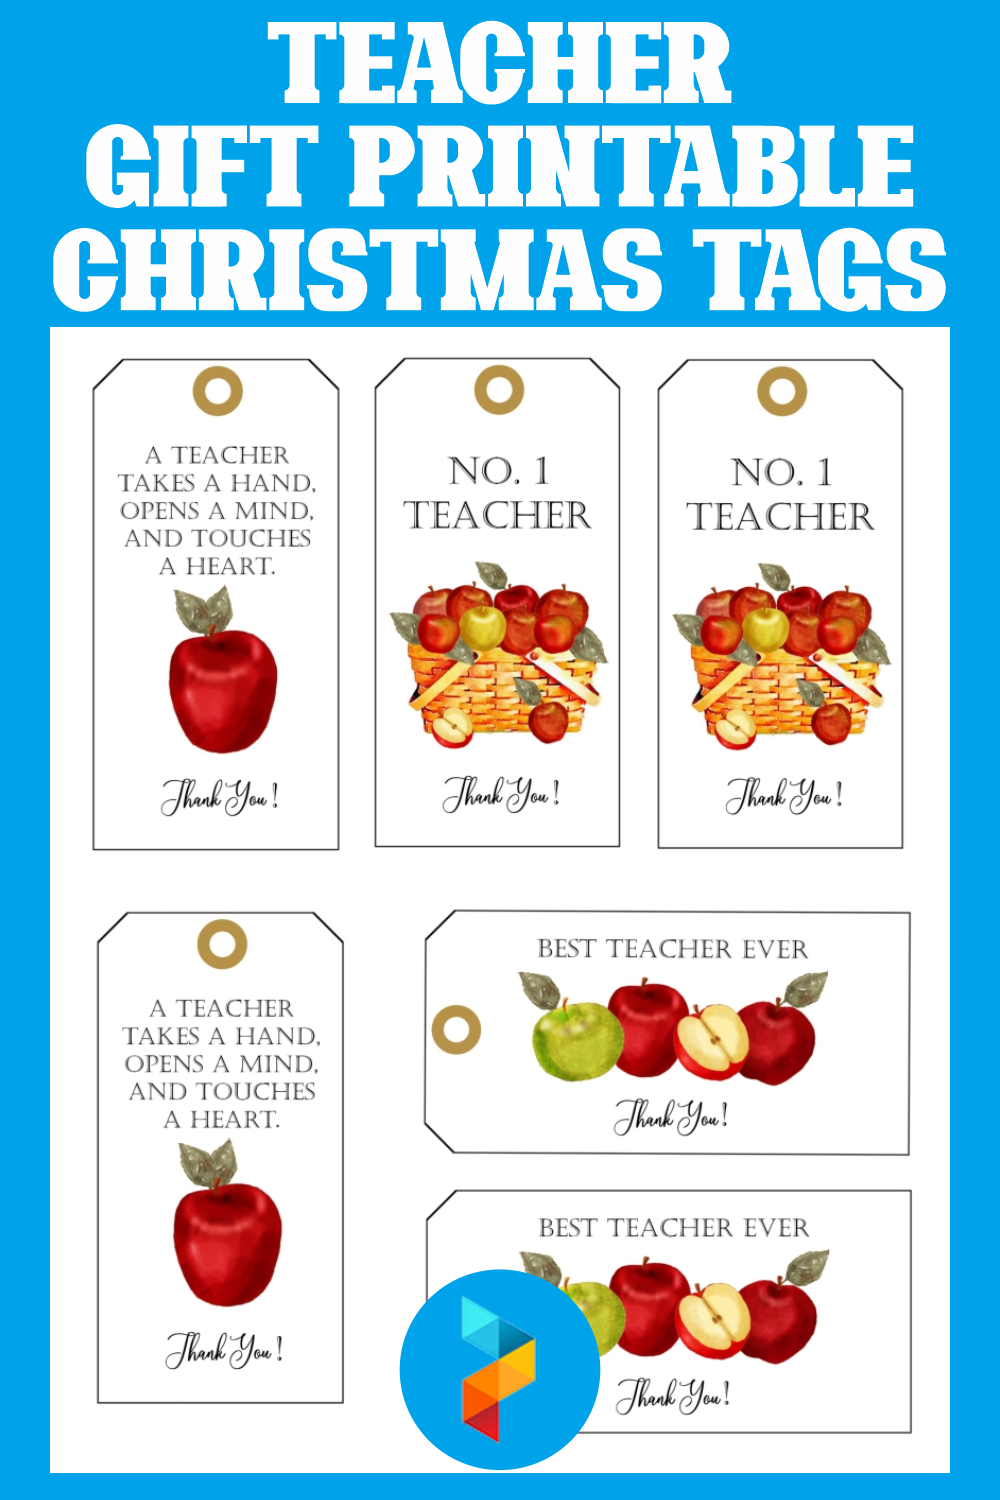 6 Best Teacher Gift Free Printable Christmas Tags